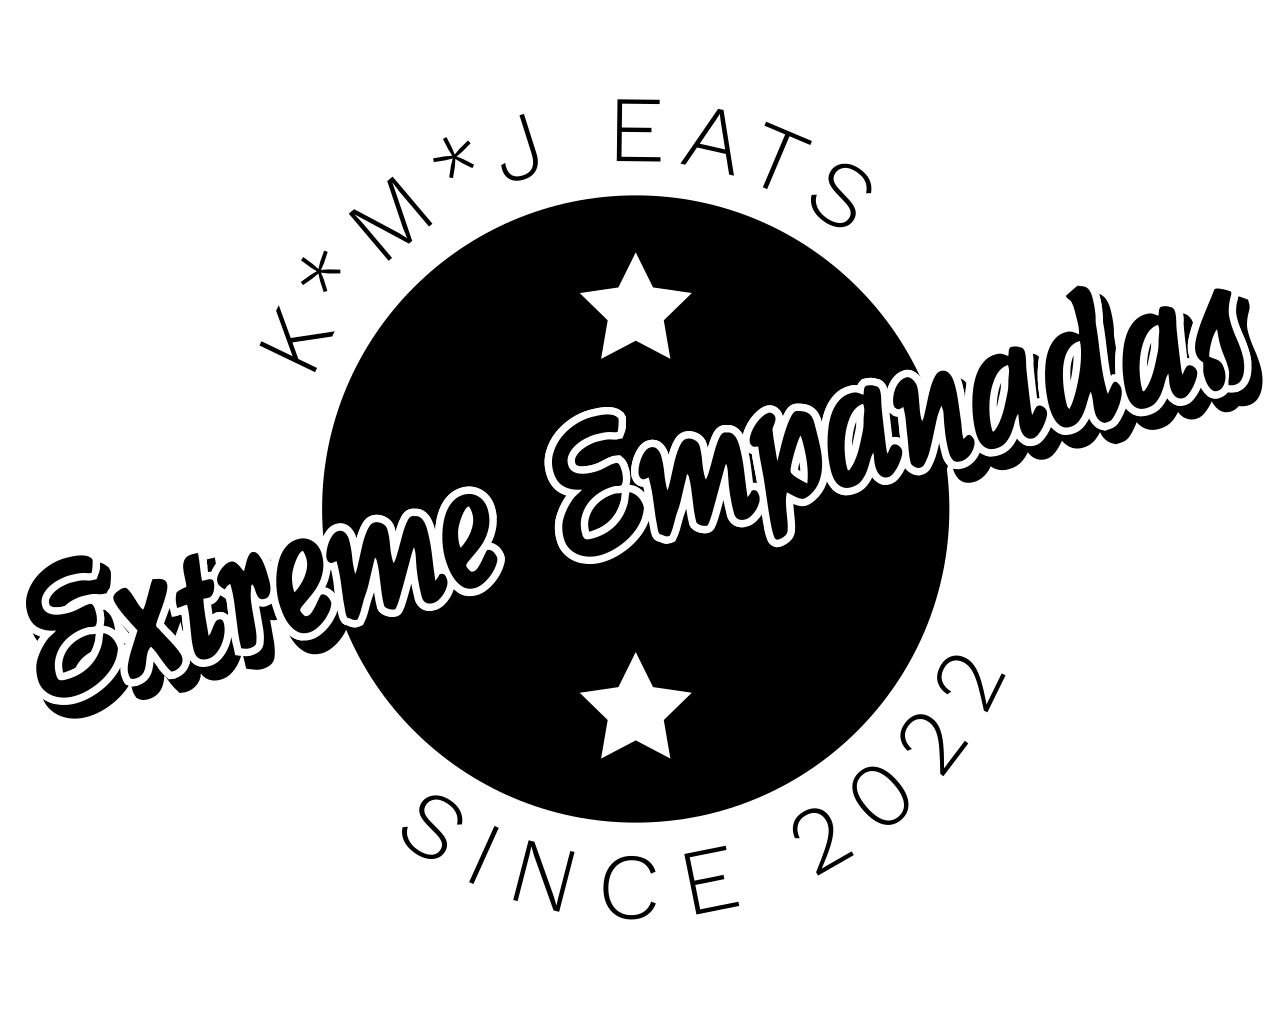 Extreme Empanadas's web page